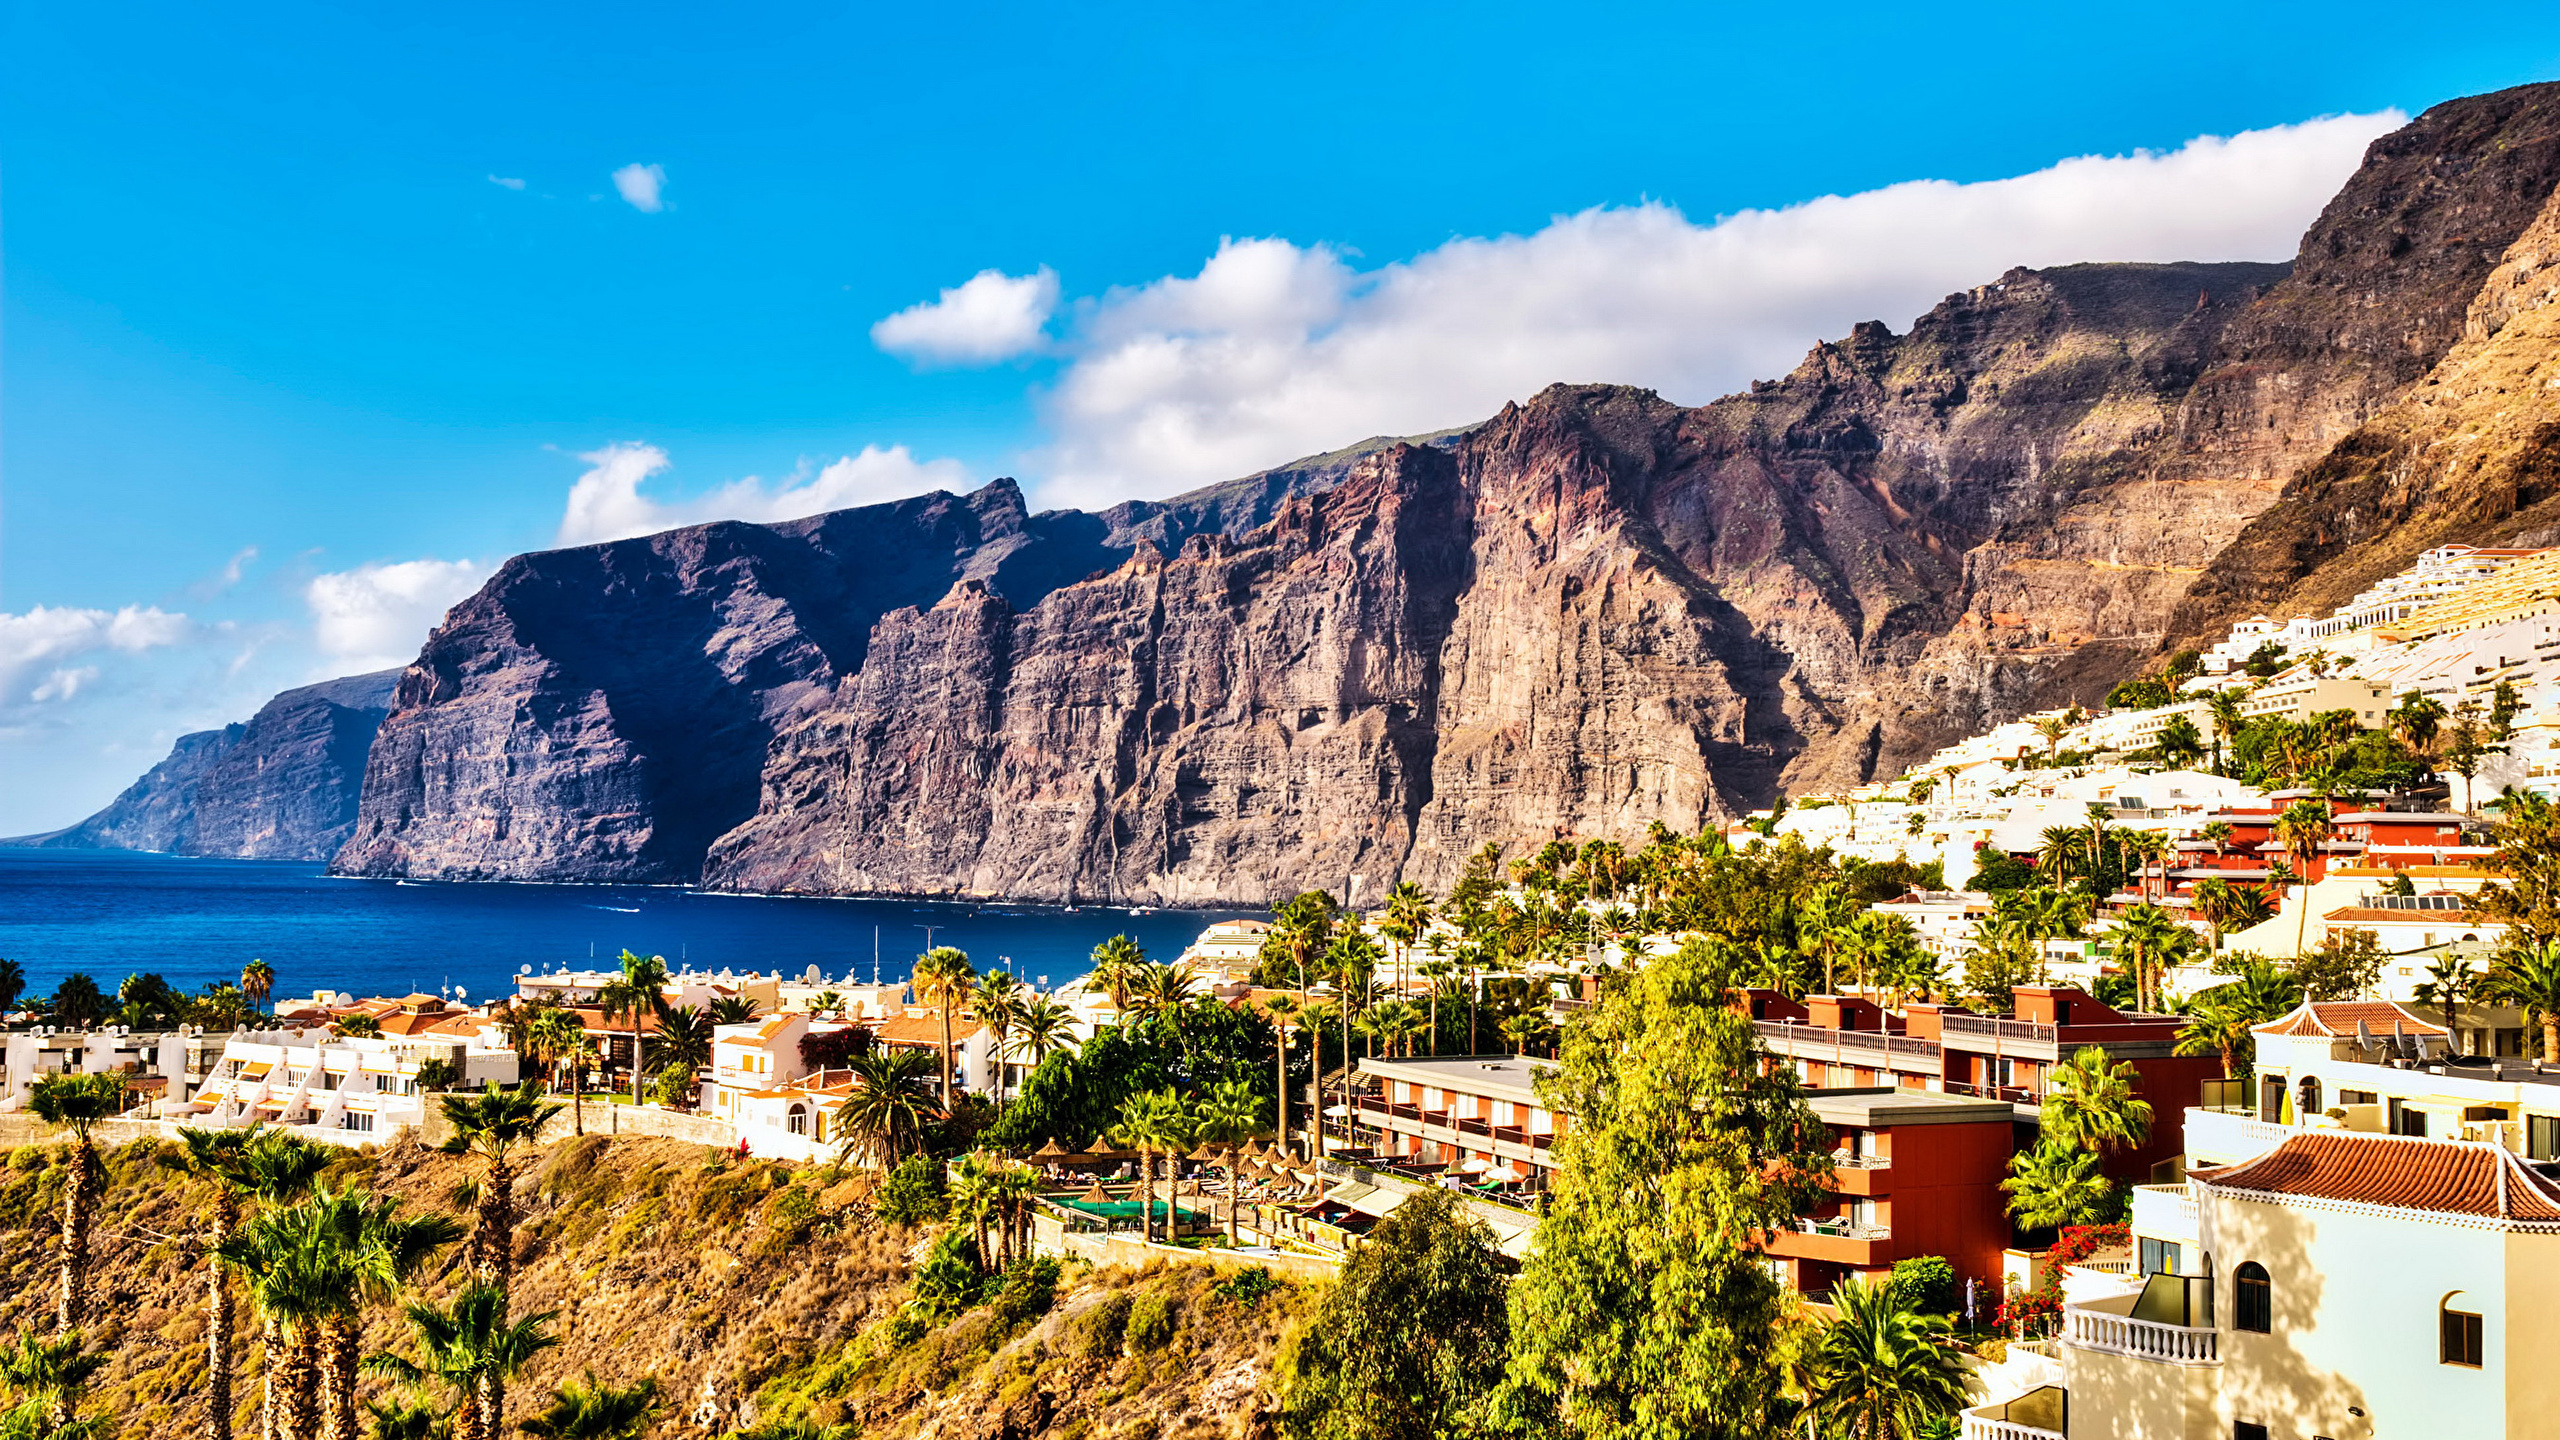 Tenerife wallpapers, Popular backgrounds, Stunning imagery, Captivating visuals, 2560x1440 HD Desktop